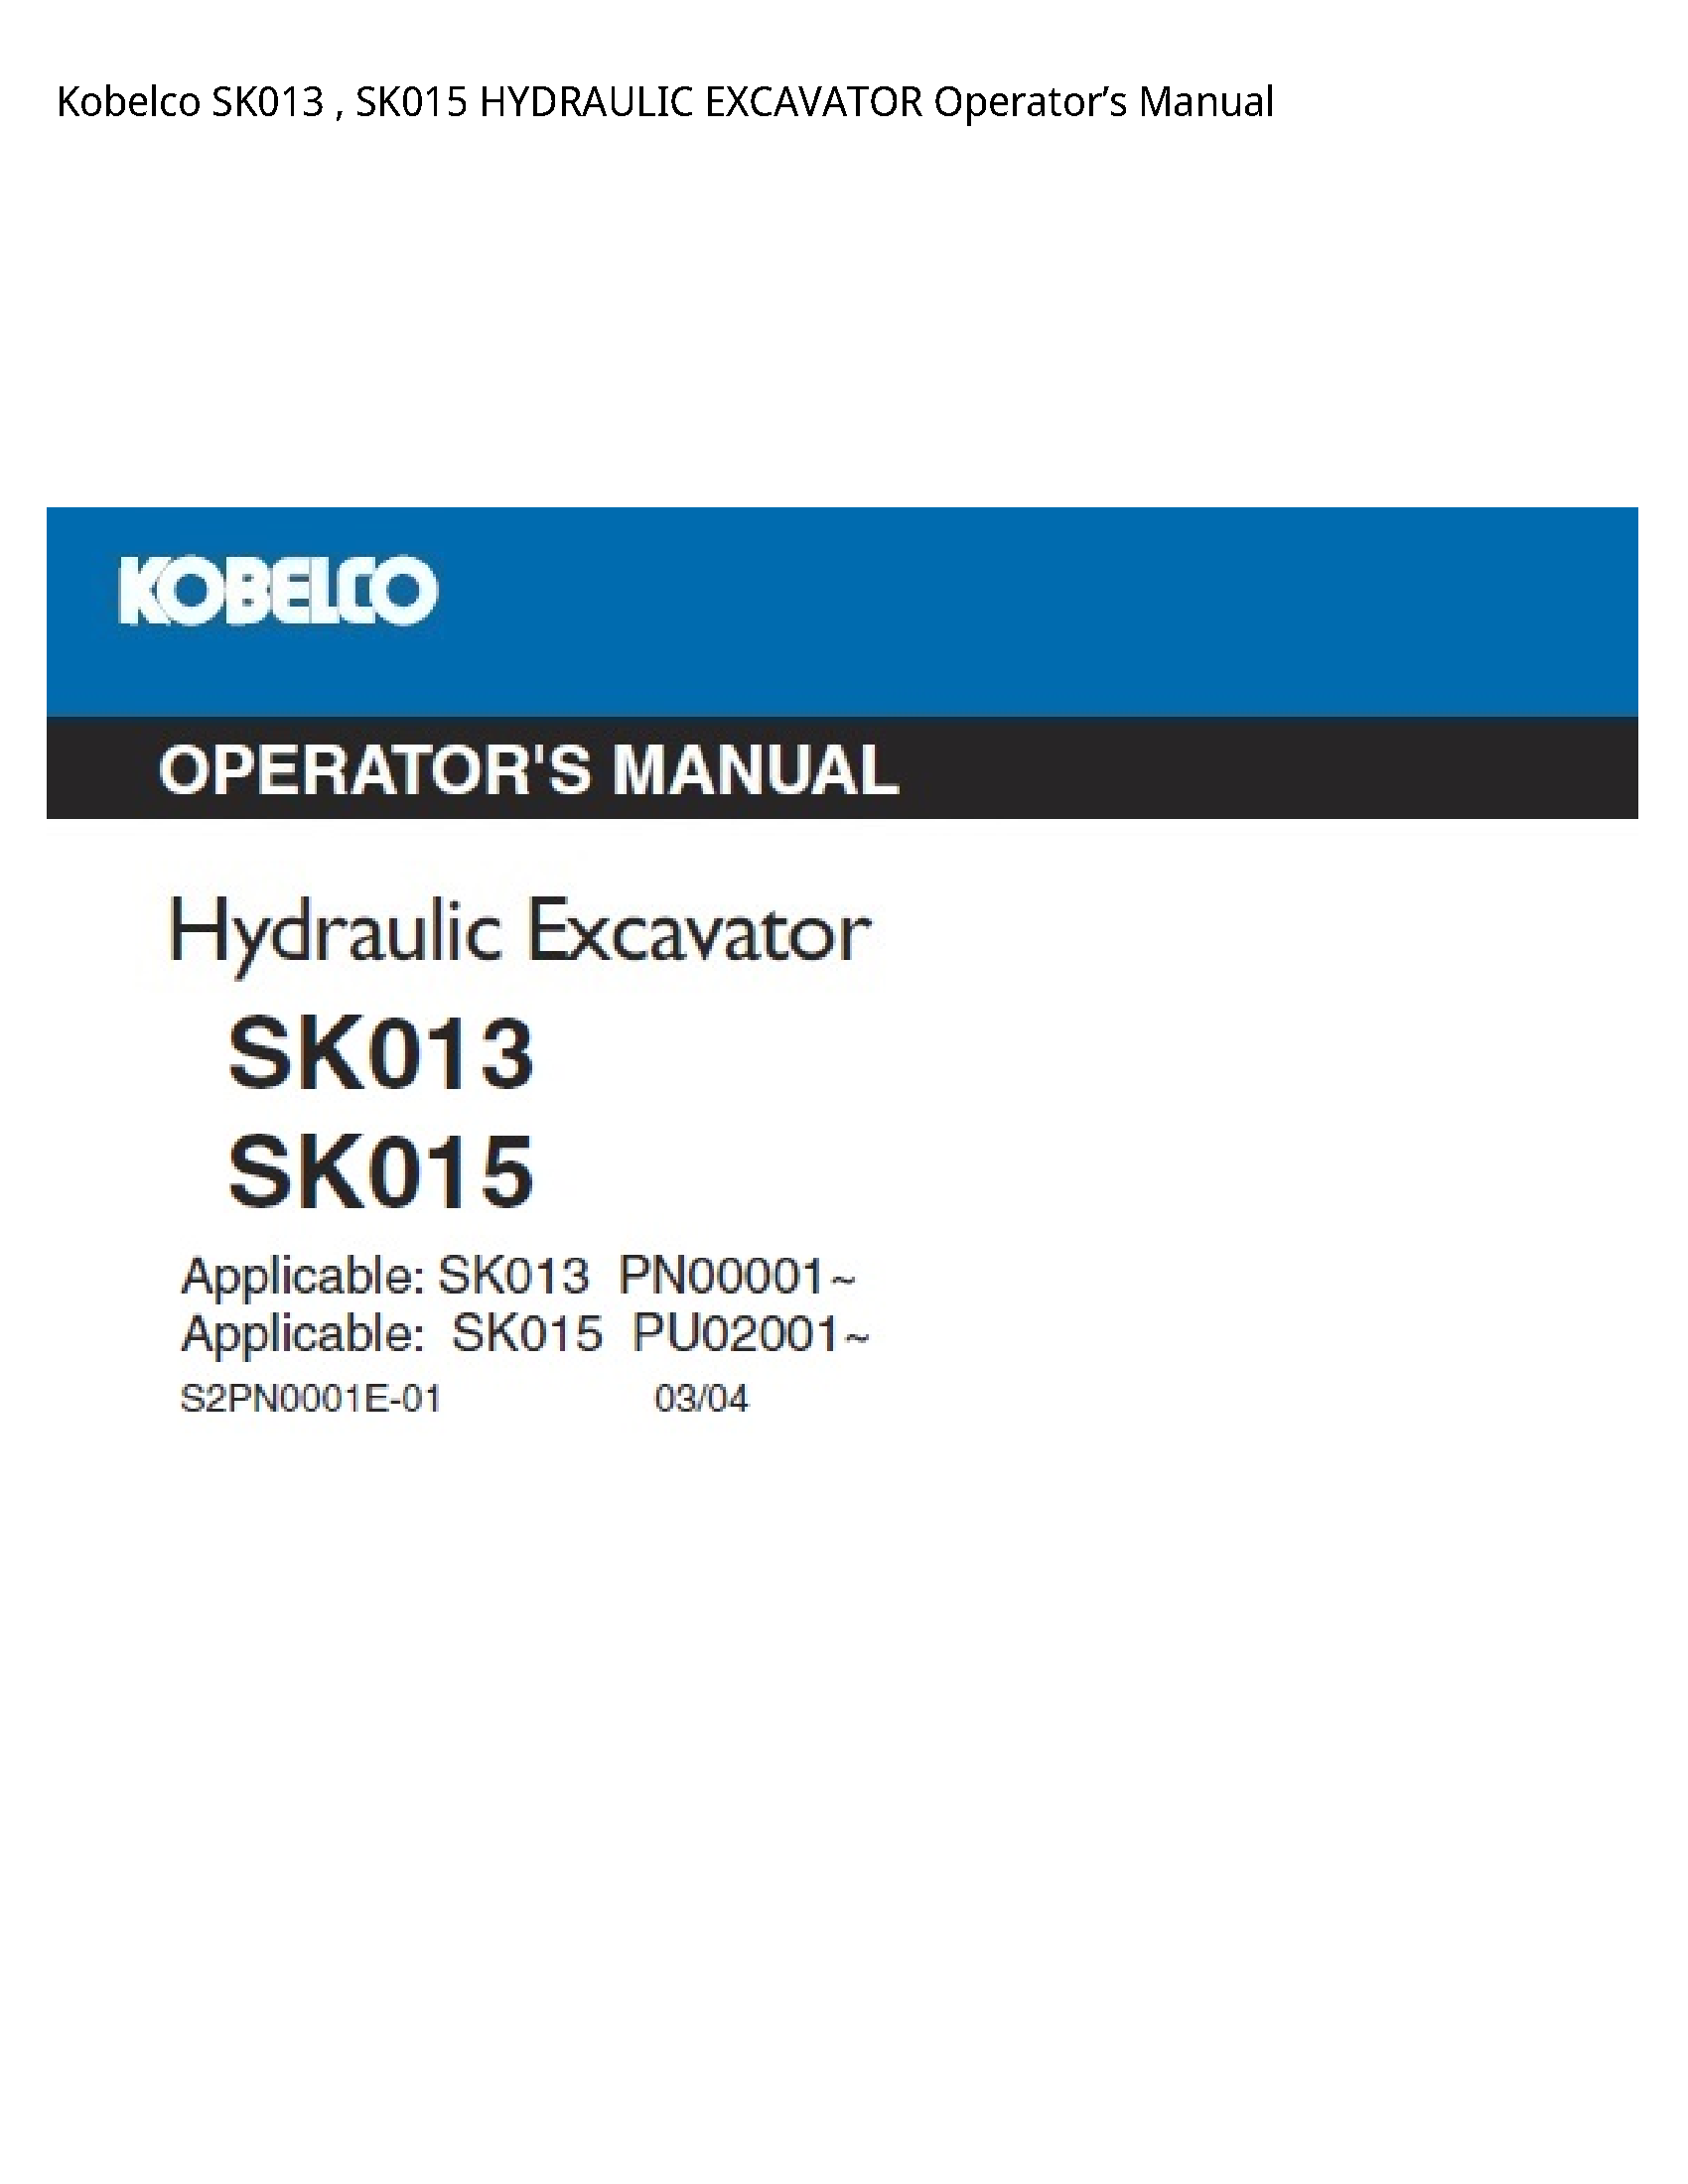 Kobelco SK013 HYDRAULIC EXCAVATOR Operator’s manual